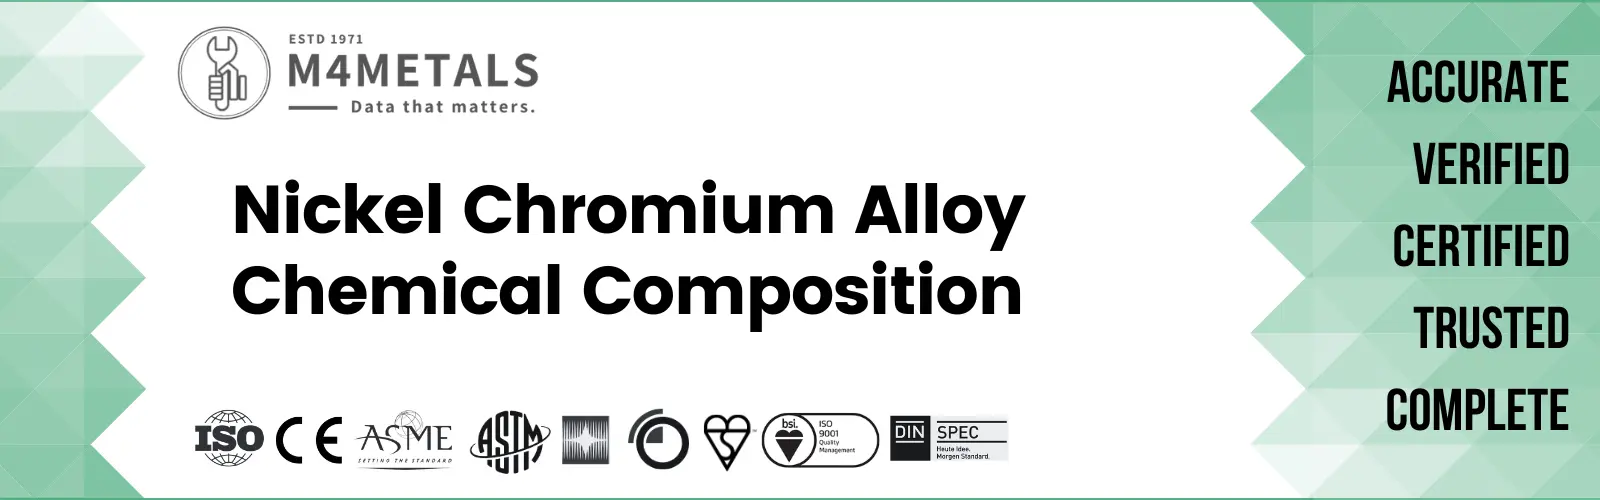 Nickel Chromium Alloy Chemical Composition